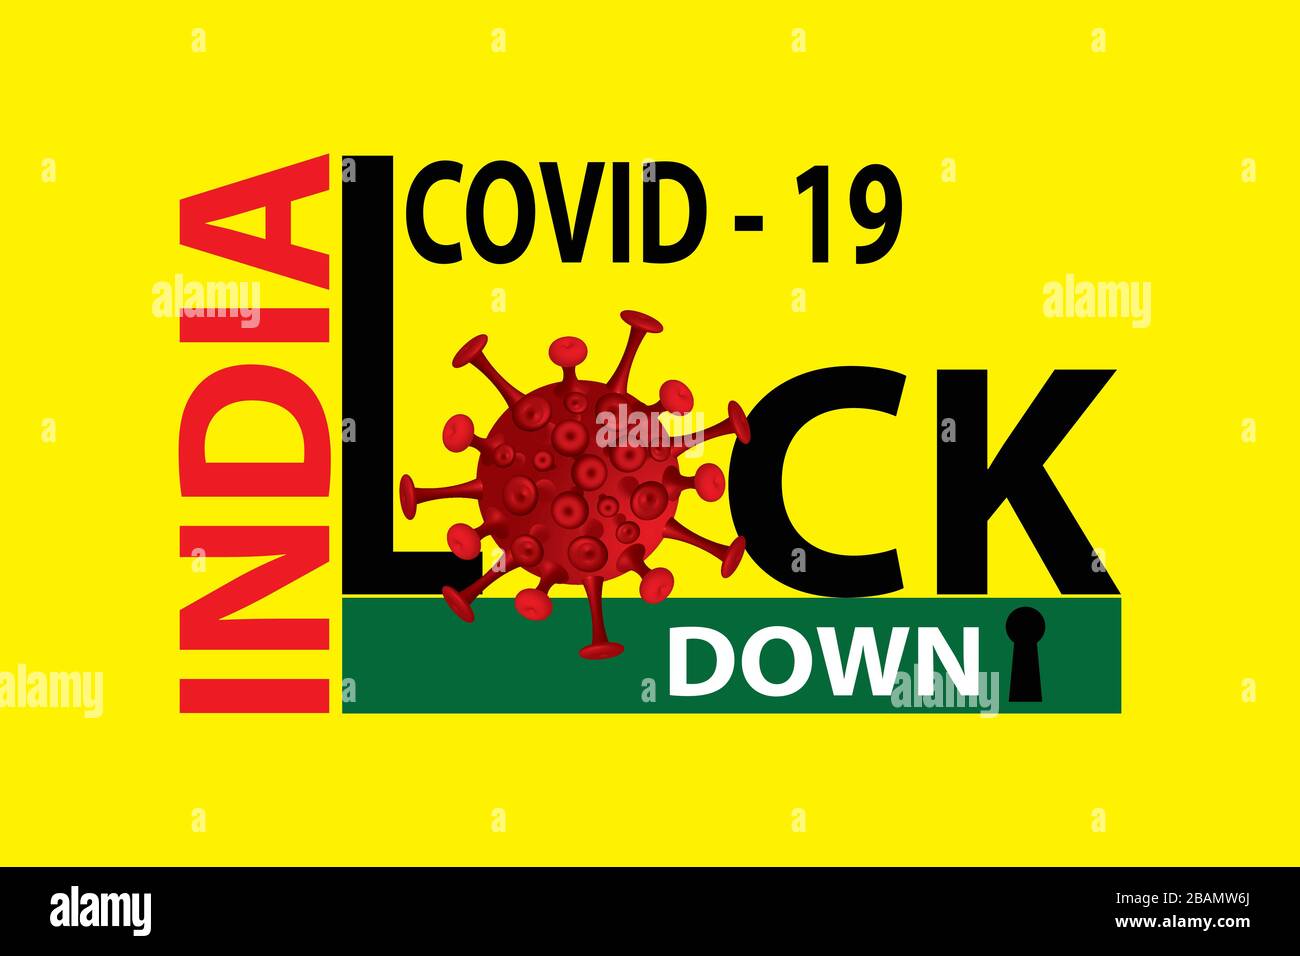 Lock down india for prevention COVID - 19 Coronavirus . Taken in advance to prevent spreading Covid - 19. Stock Vector